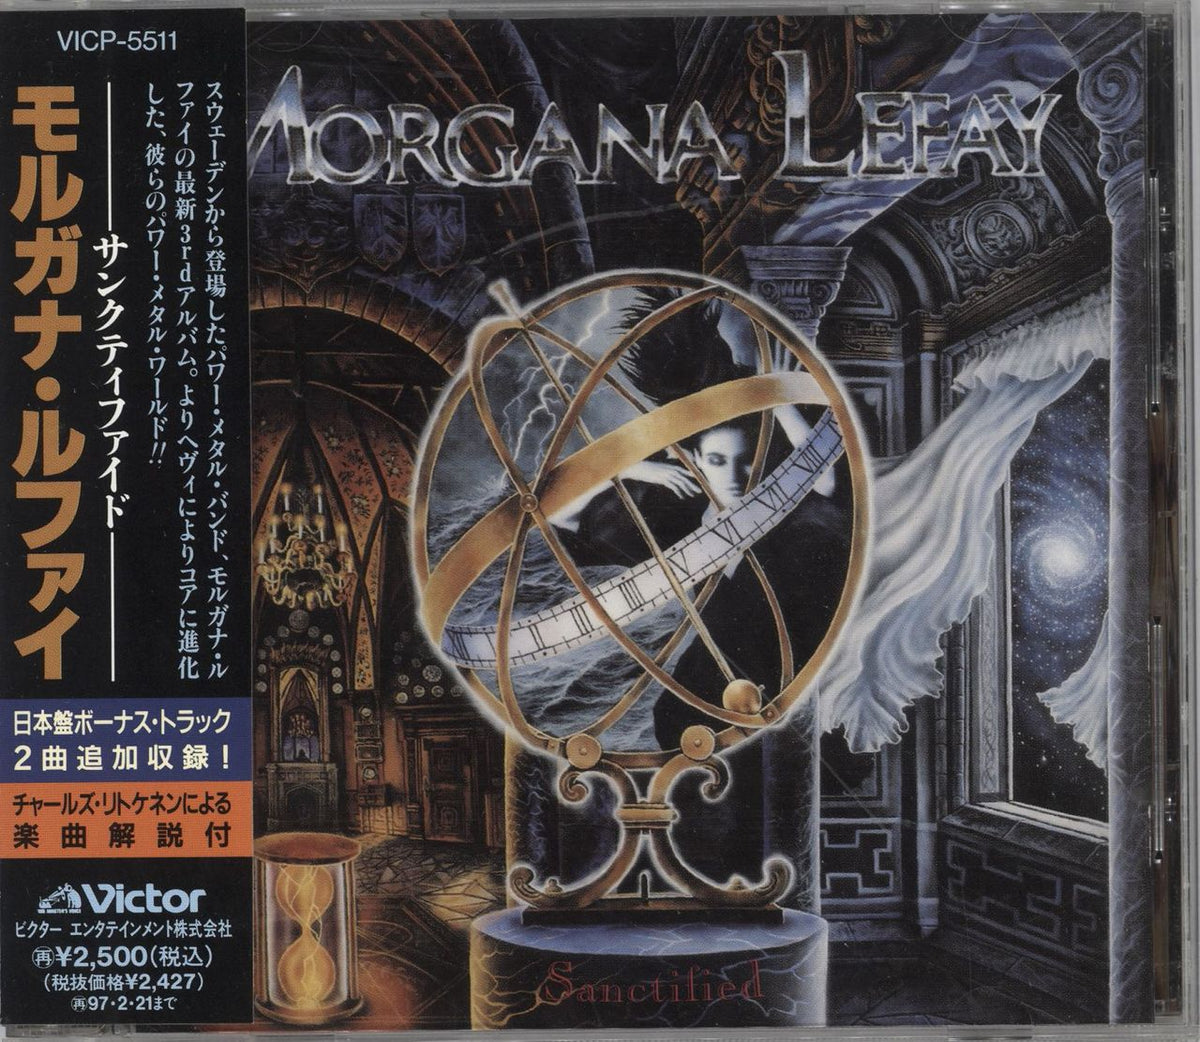 Morgana Lefay Sanctified Japanese Promo CD album — RareVinyl.com